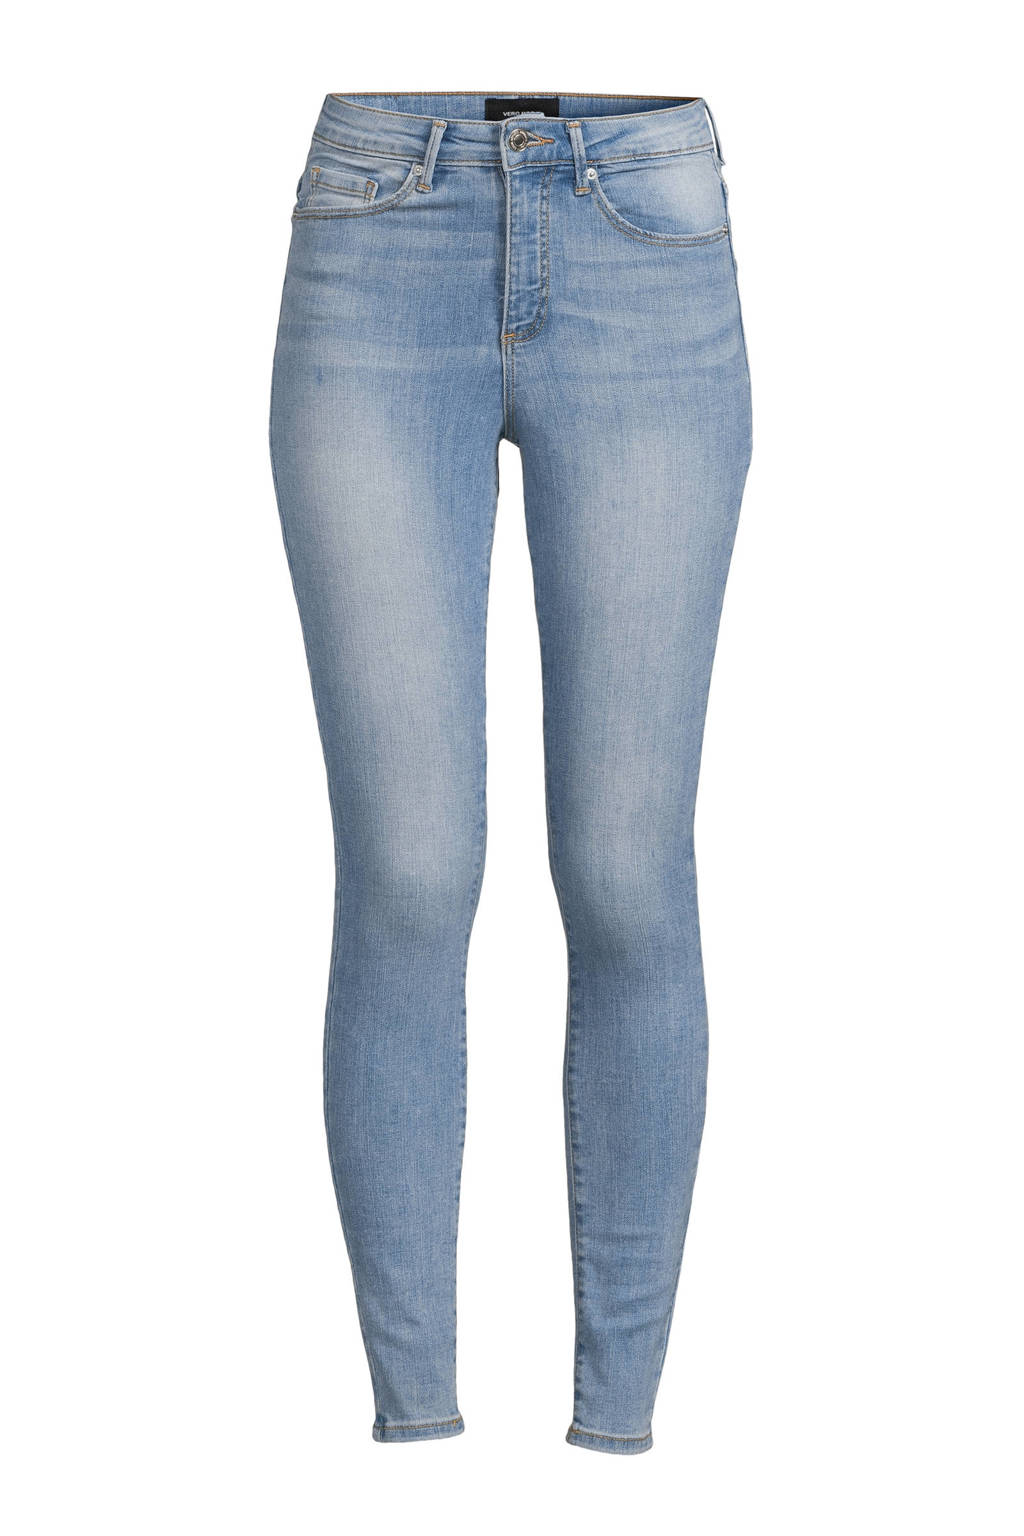 denim light high blue skinny VERO jeans | MODA wehkamp VMSOPHIA waist